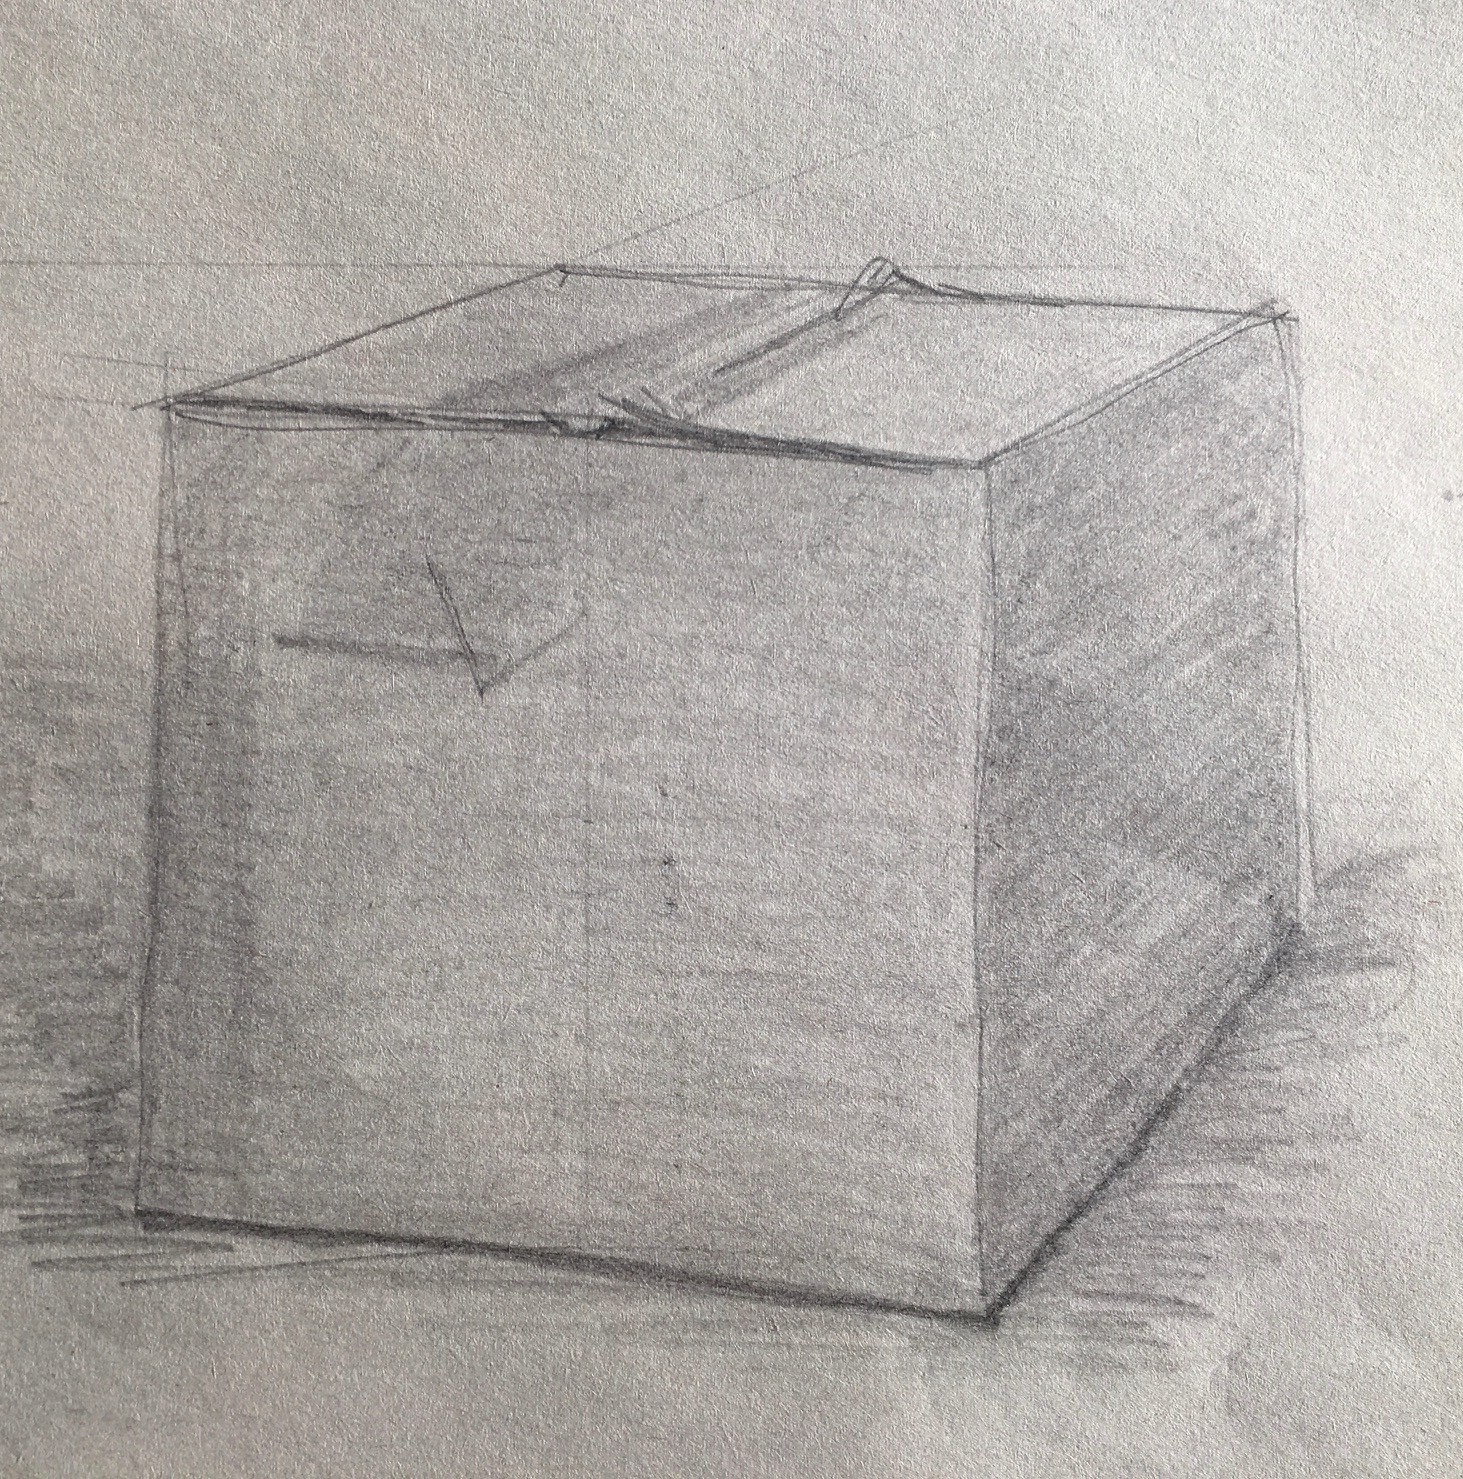 Box #2, 2018
Pencil on Paper
7"W x 6.5"H, Walli White, artist